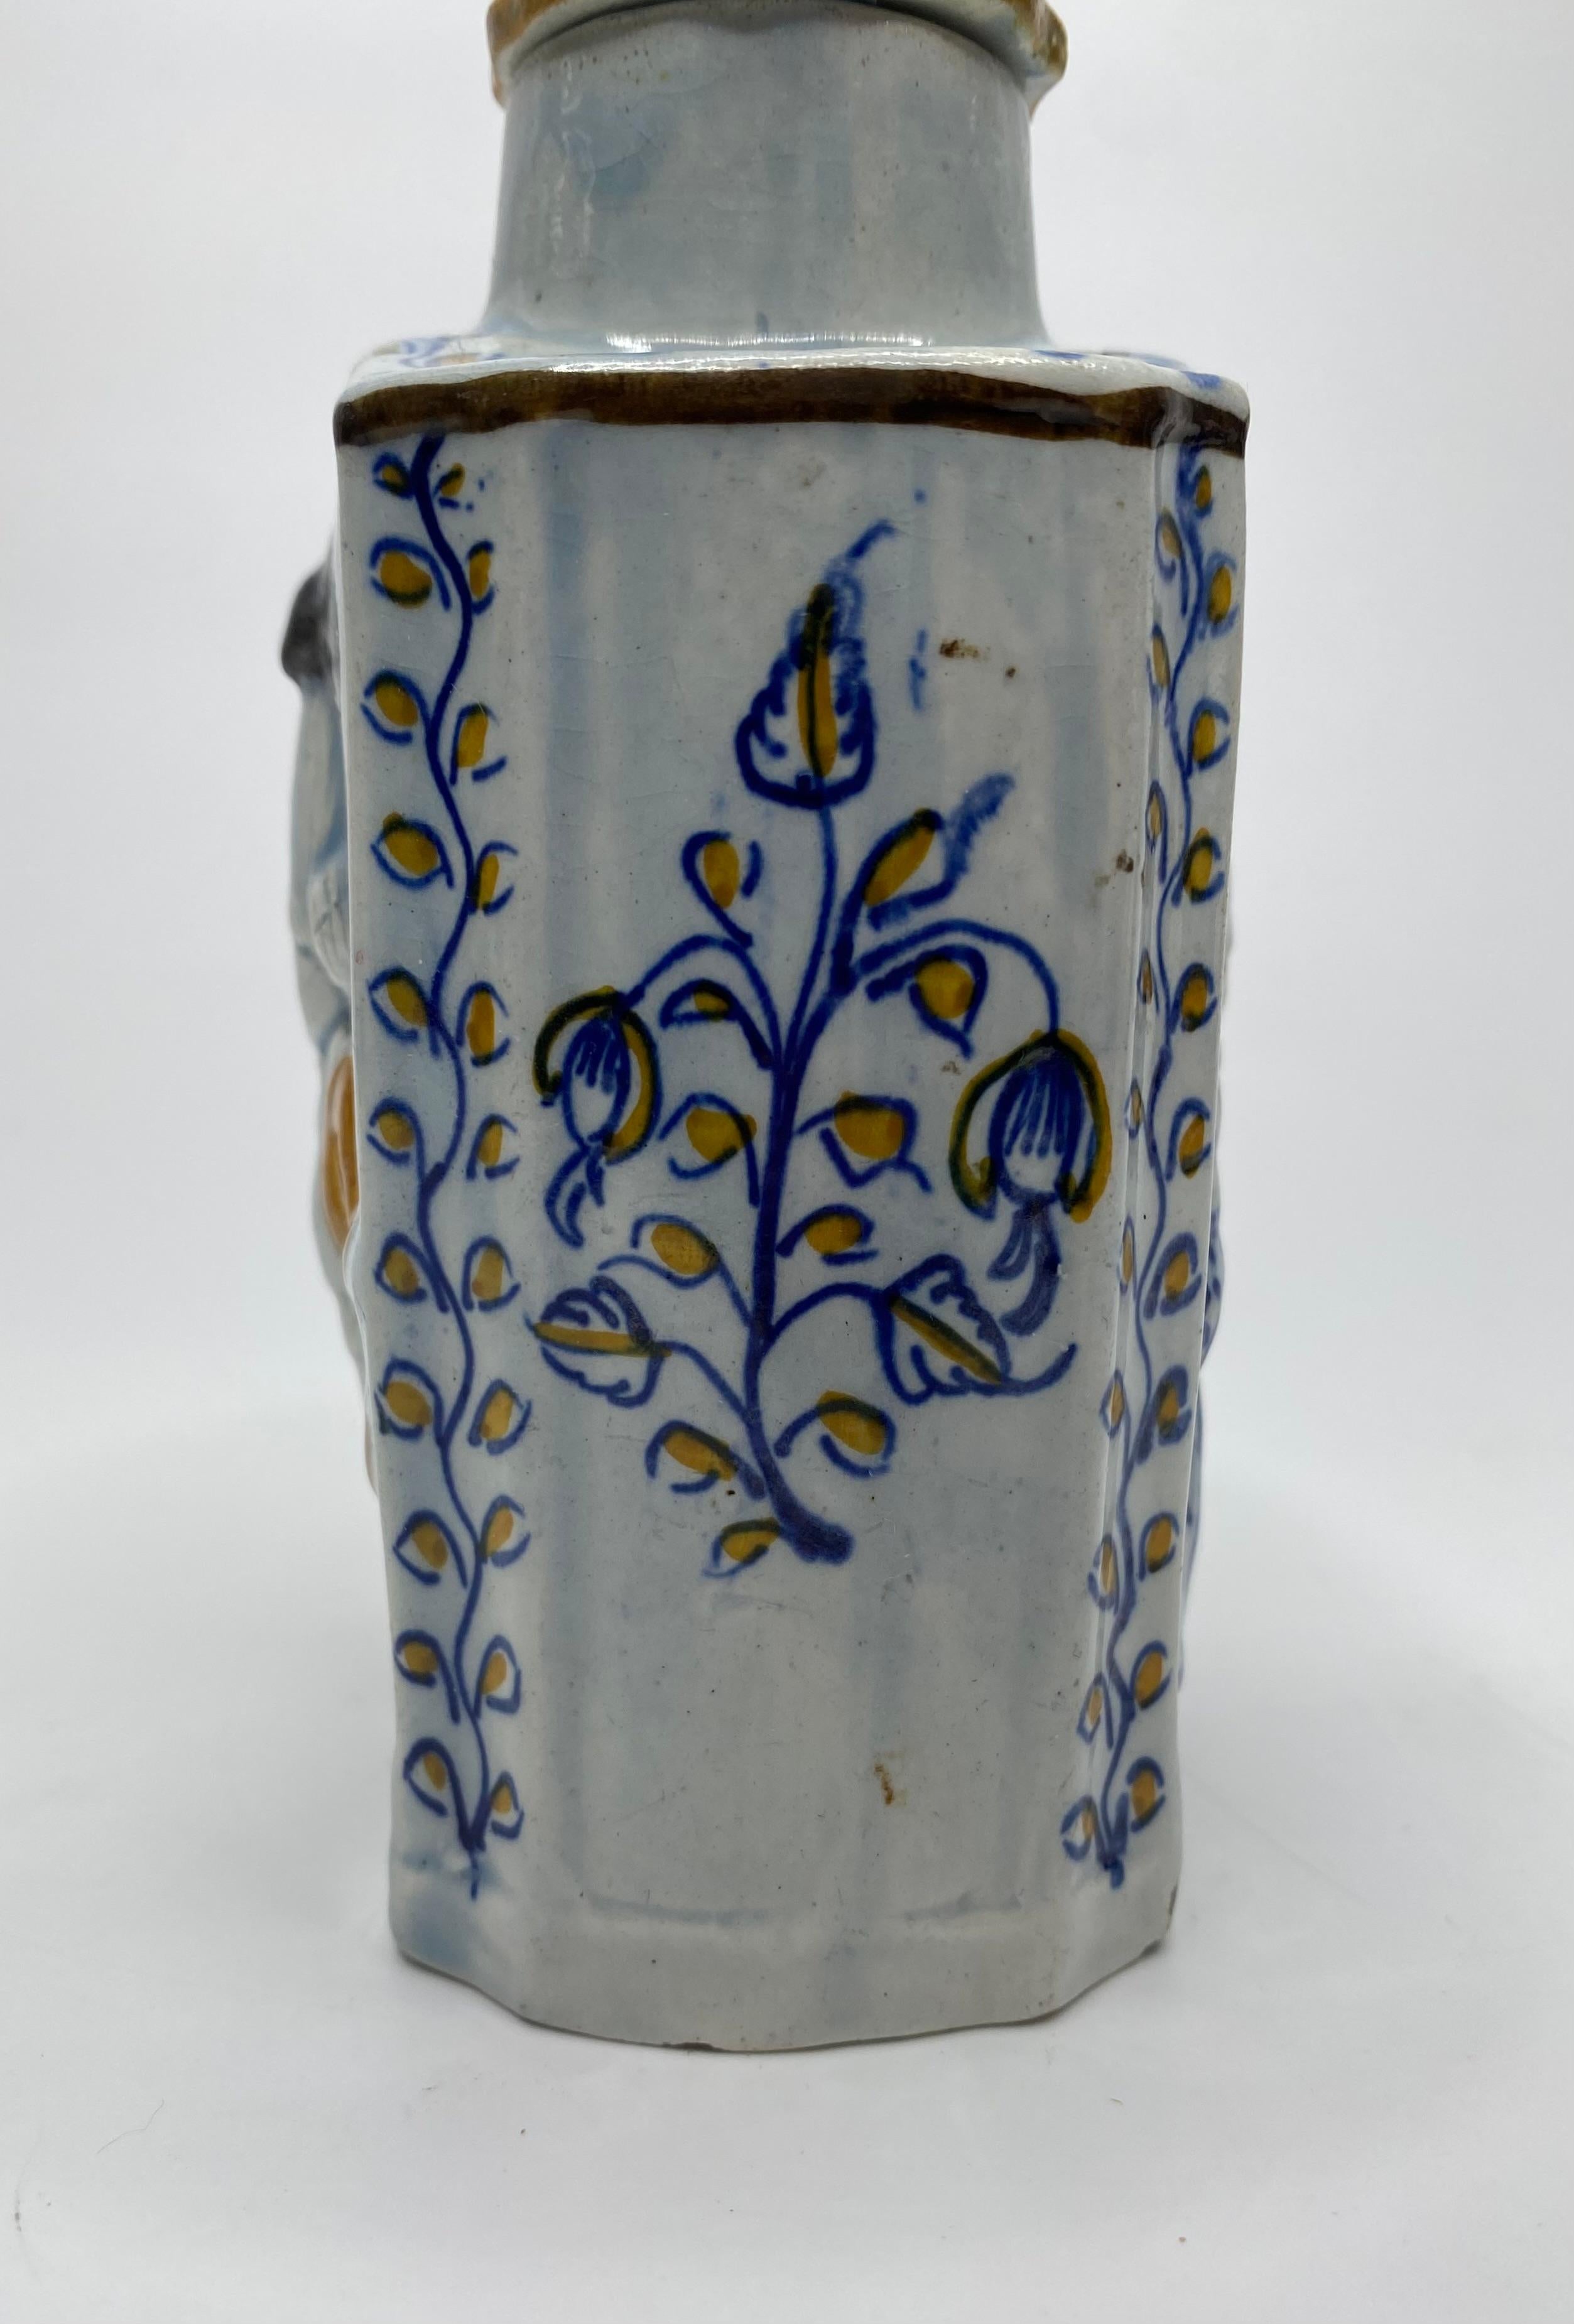 Prattware pottery ‘Macaroni’ tea caddy and cover, c. 1800. 1